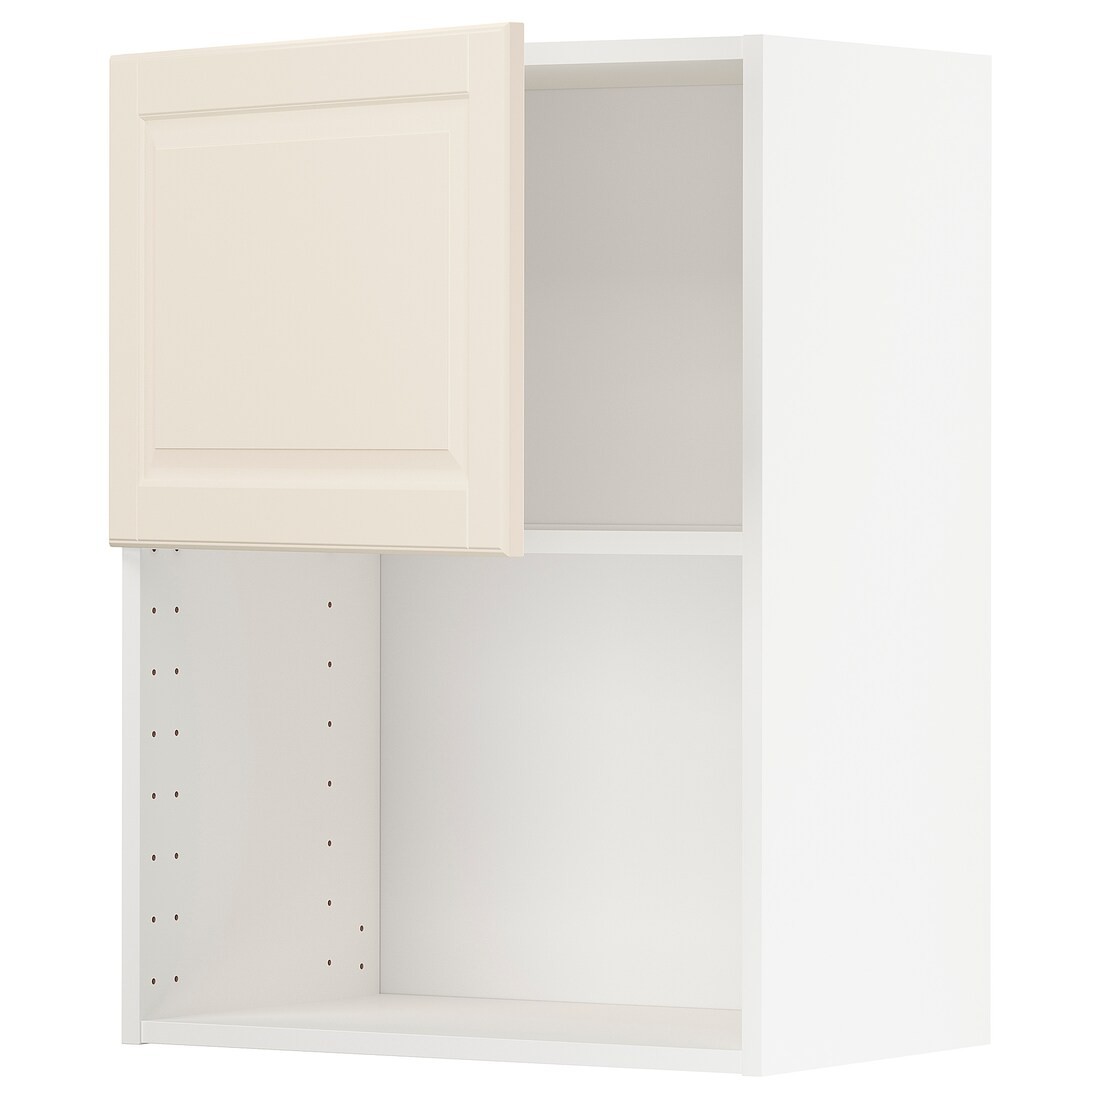 IKEA METOD МЕТОД Навесной шкаф для СВЧ-печи, белый / Bodbyn кремовый, 60x80 см 79454917 | 794.549.17